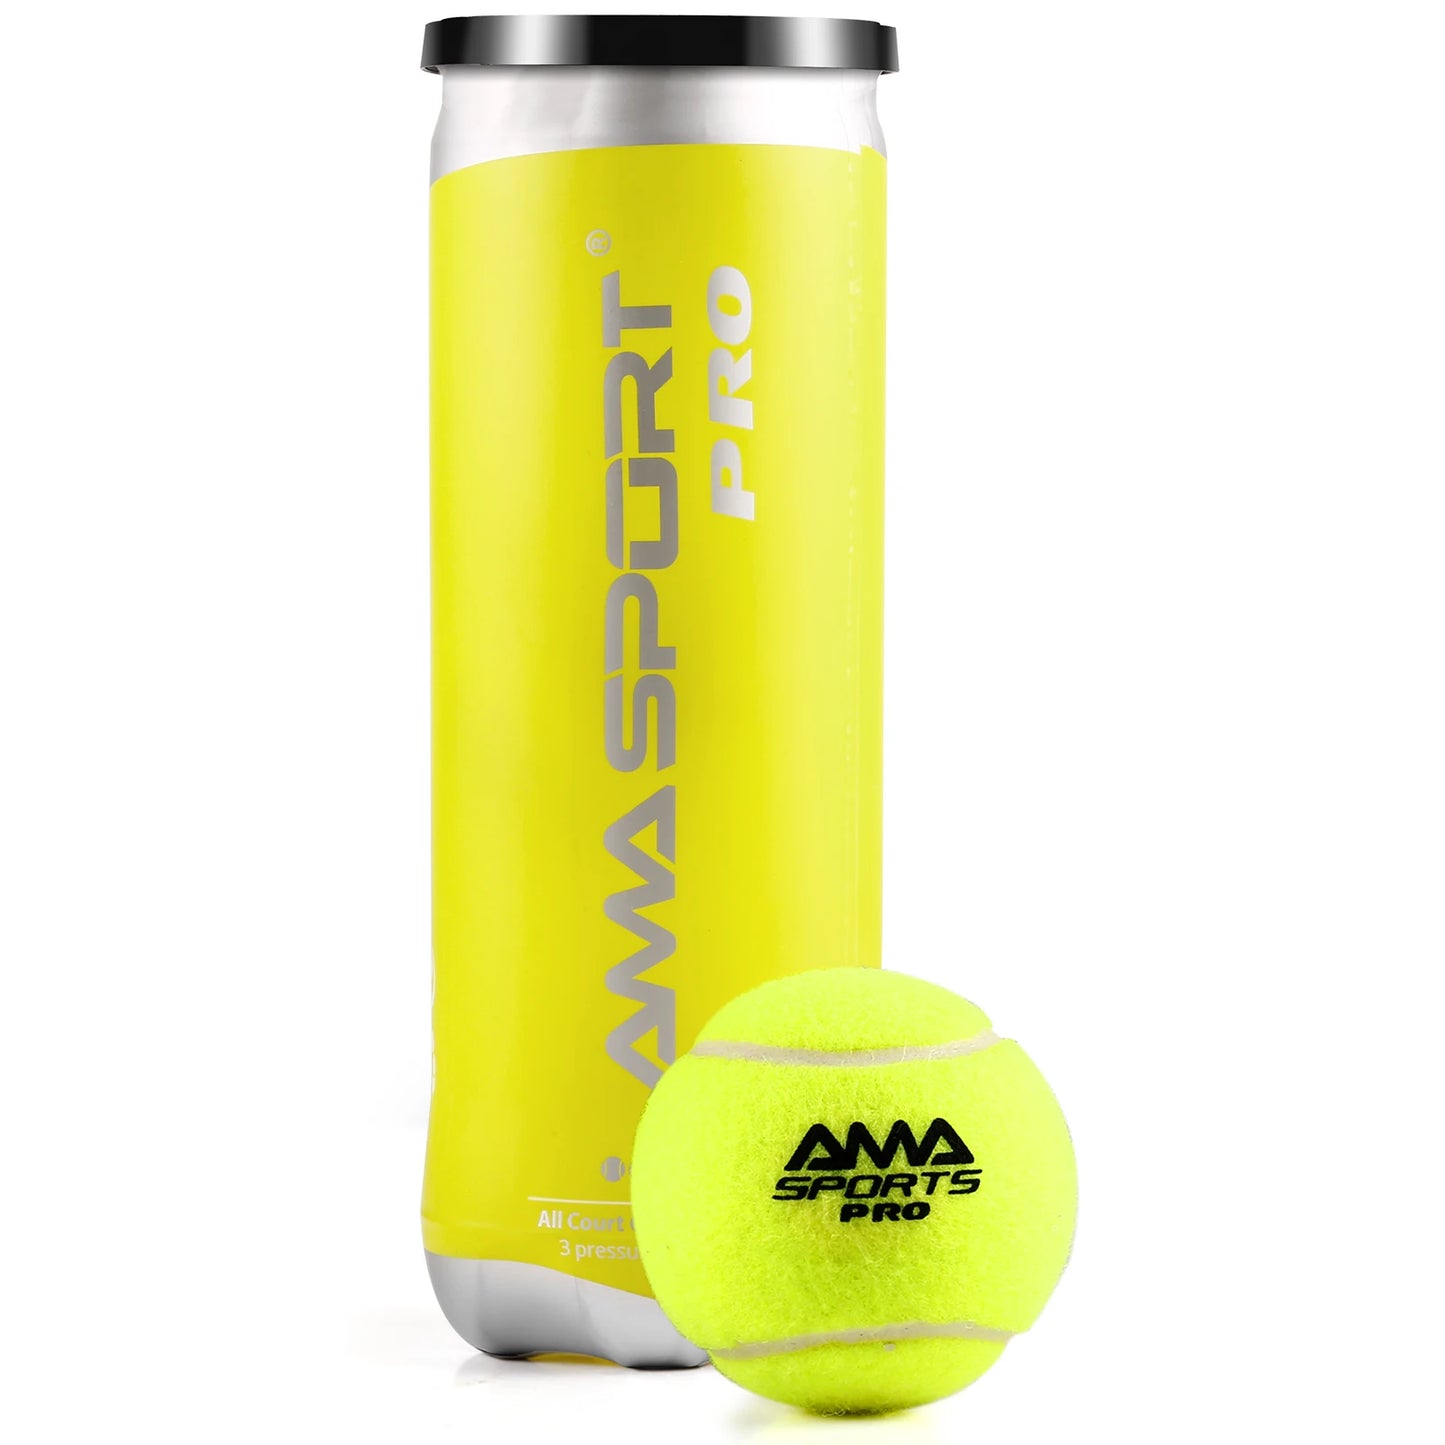 Multi-Court Tennis Training Balls